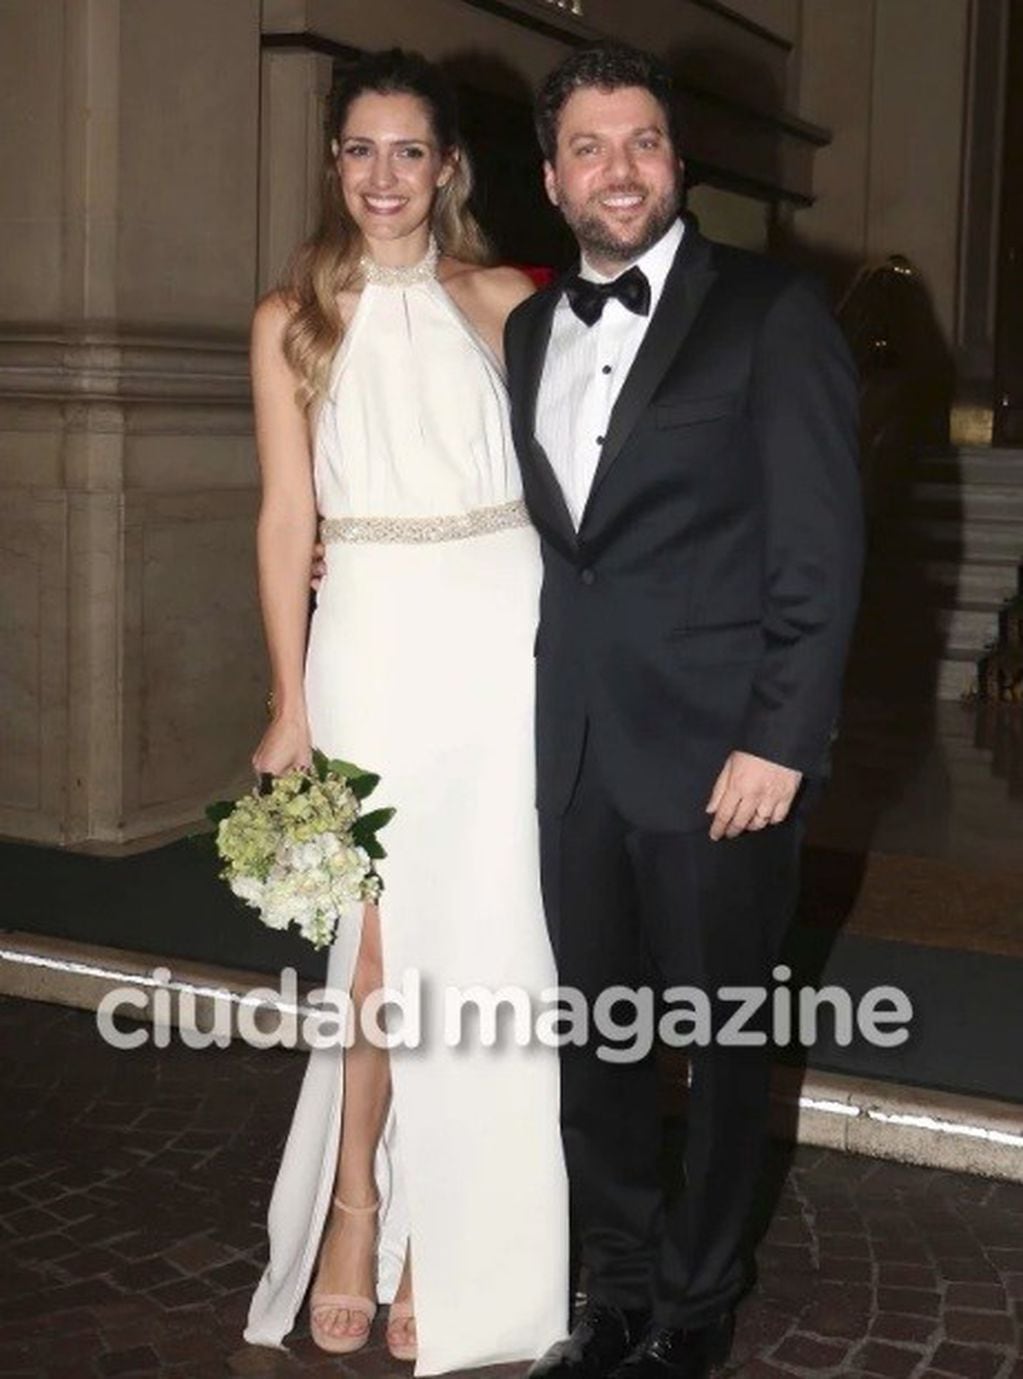 Casamiento de Guido Kaczka. (Foto: Ciudad Magazine)